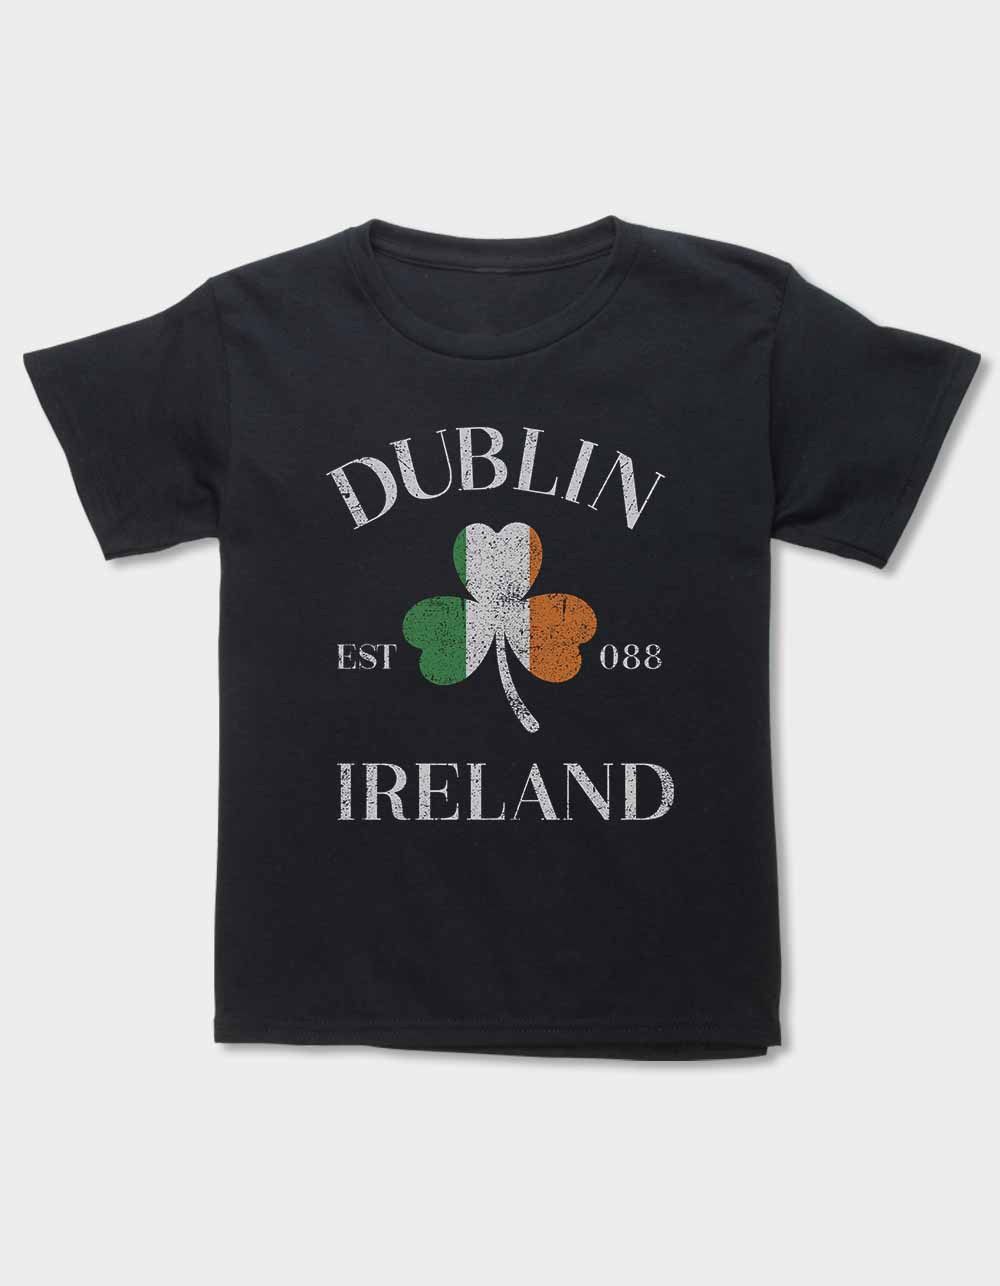 IRELAND Dublin Clover Flag Distressed Unisex Kids Tee - BLACK